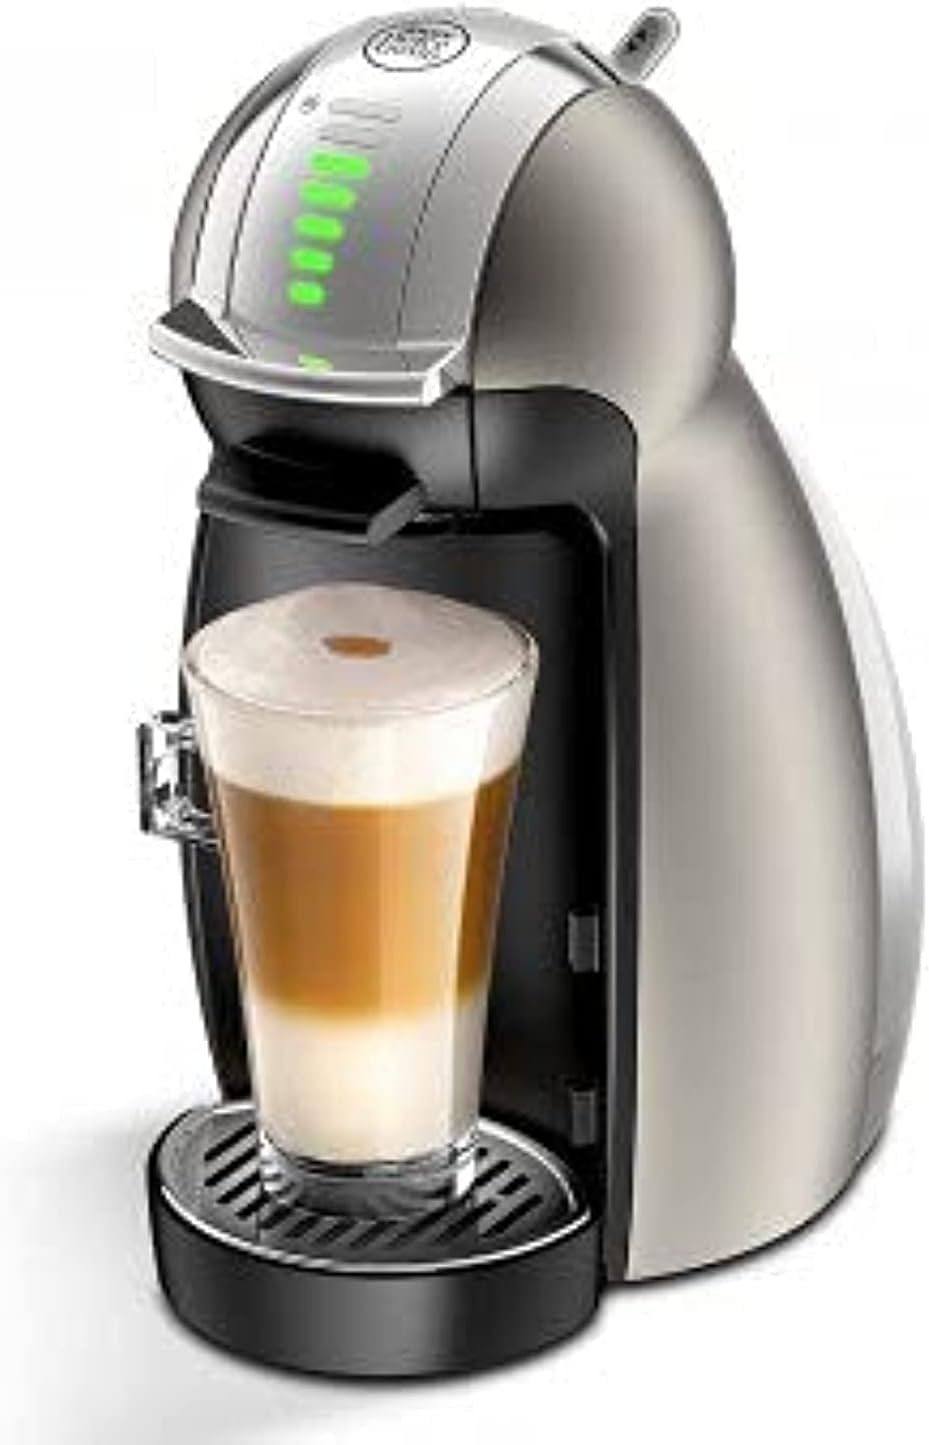 DOLCE GUSTO GENIO2 COFFEE MACHINE TITANIUM EDG465.T